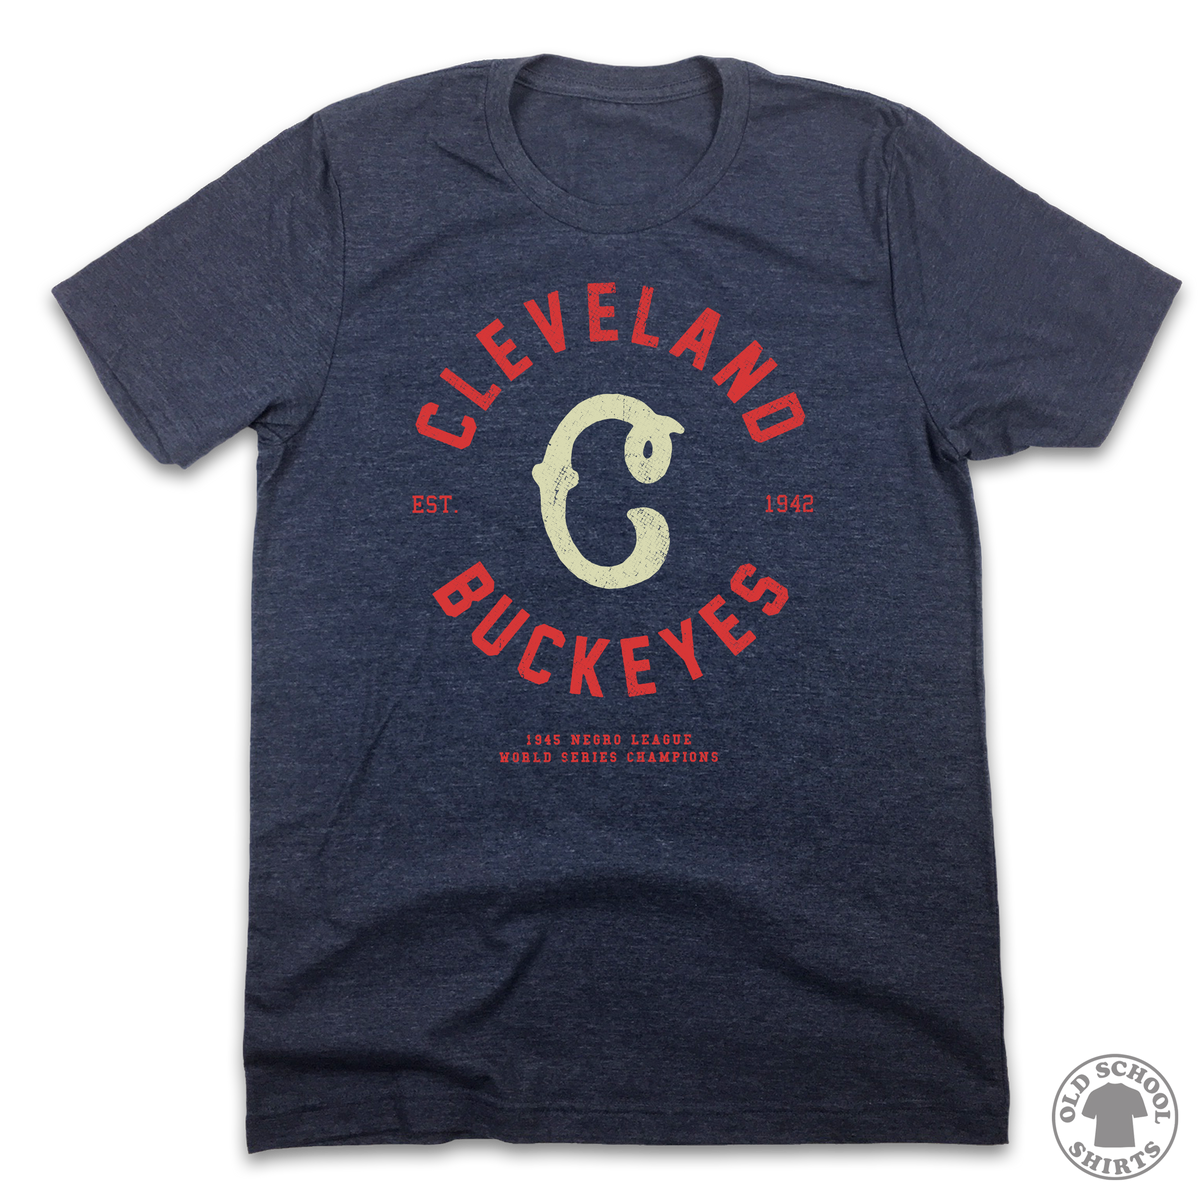 Cleveland Buckeyes - Old School Shirts- Retro Sports T Shirts